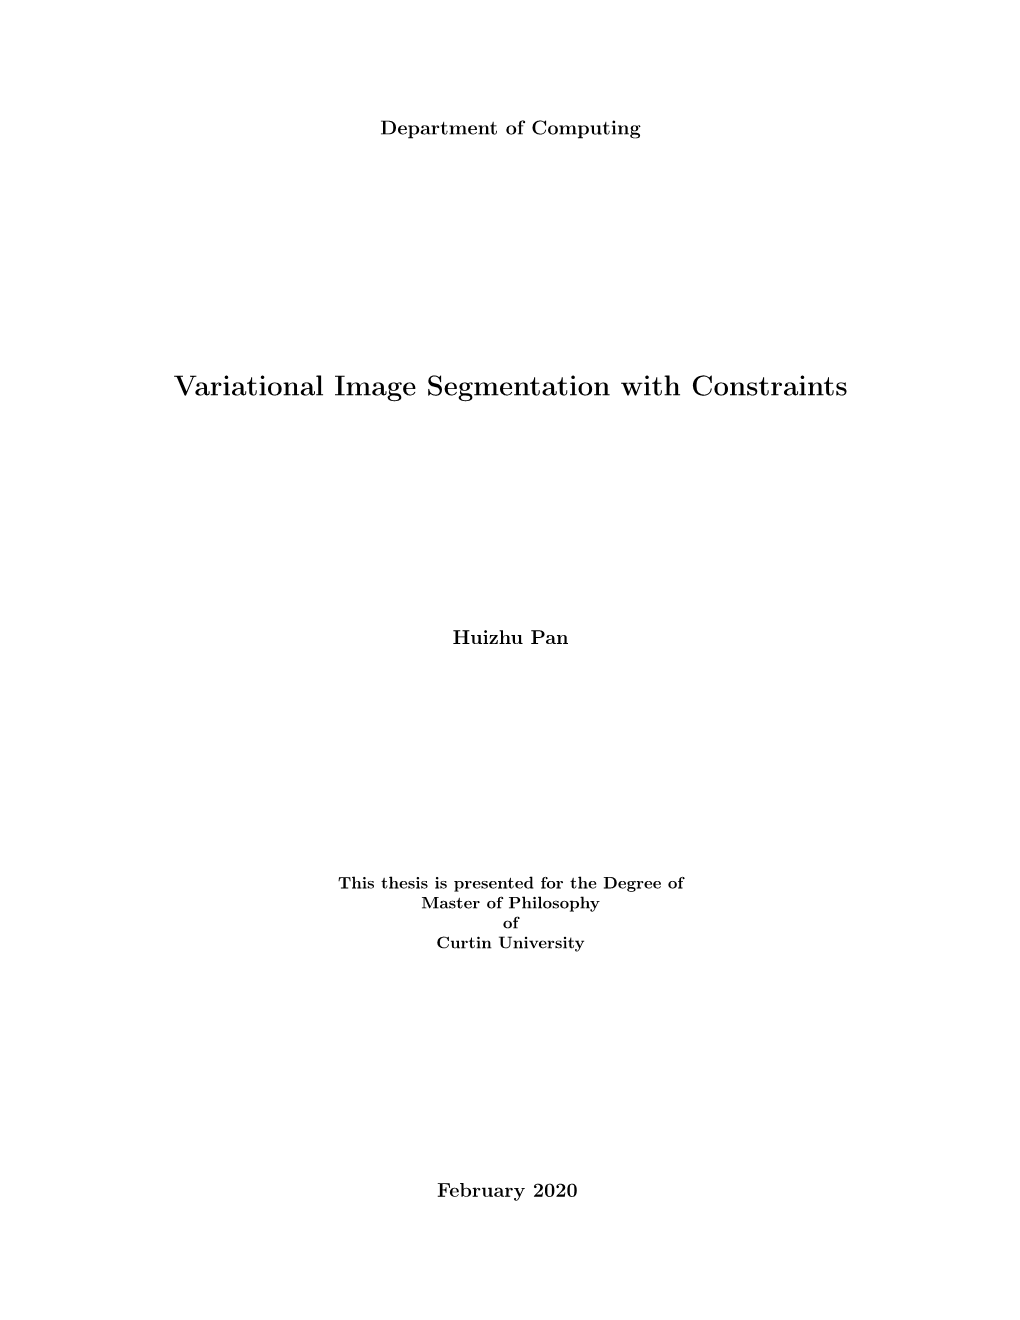 Variational Image Segmentation with Constraints